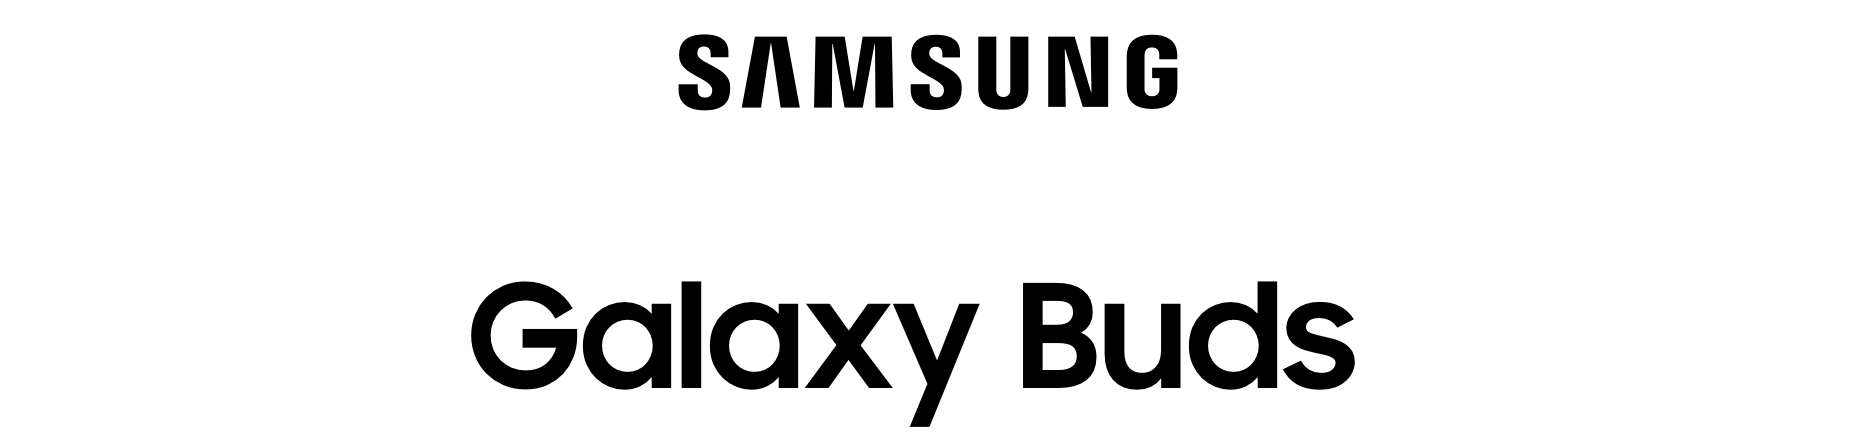 samsung-buds-logo